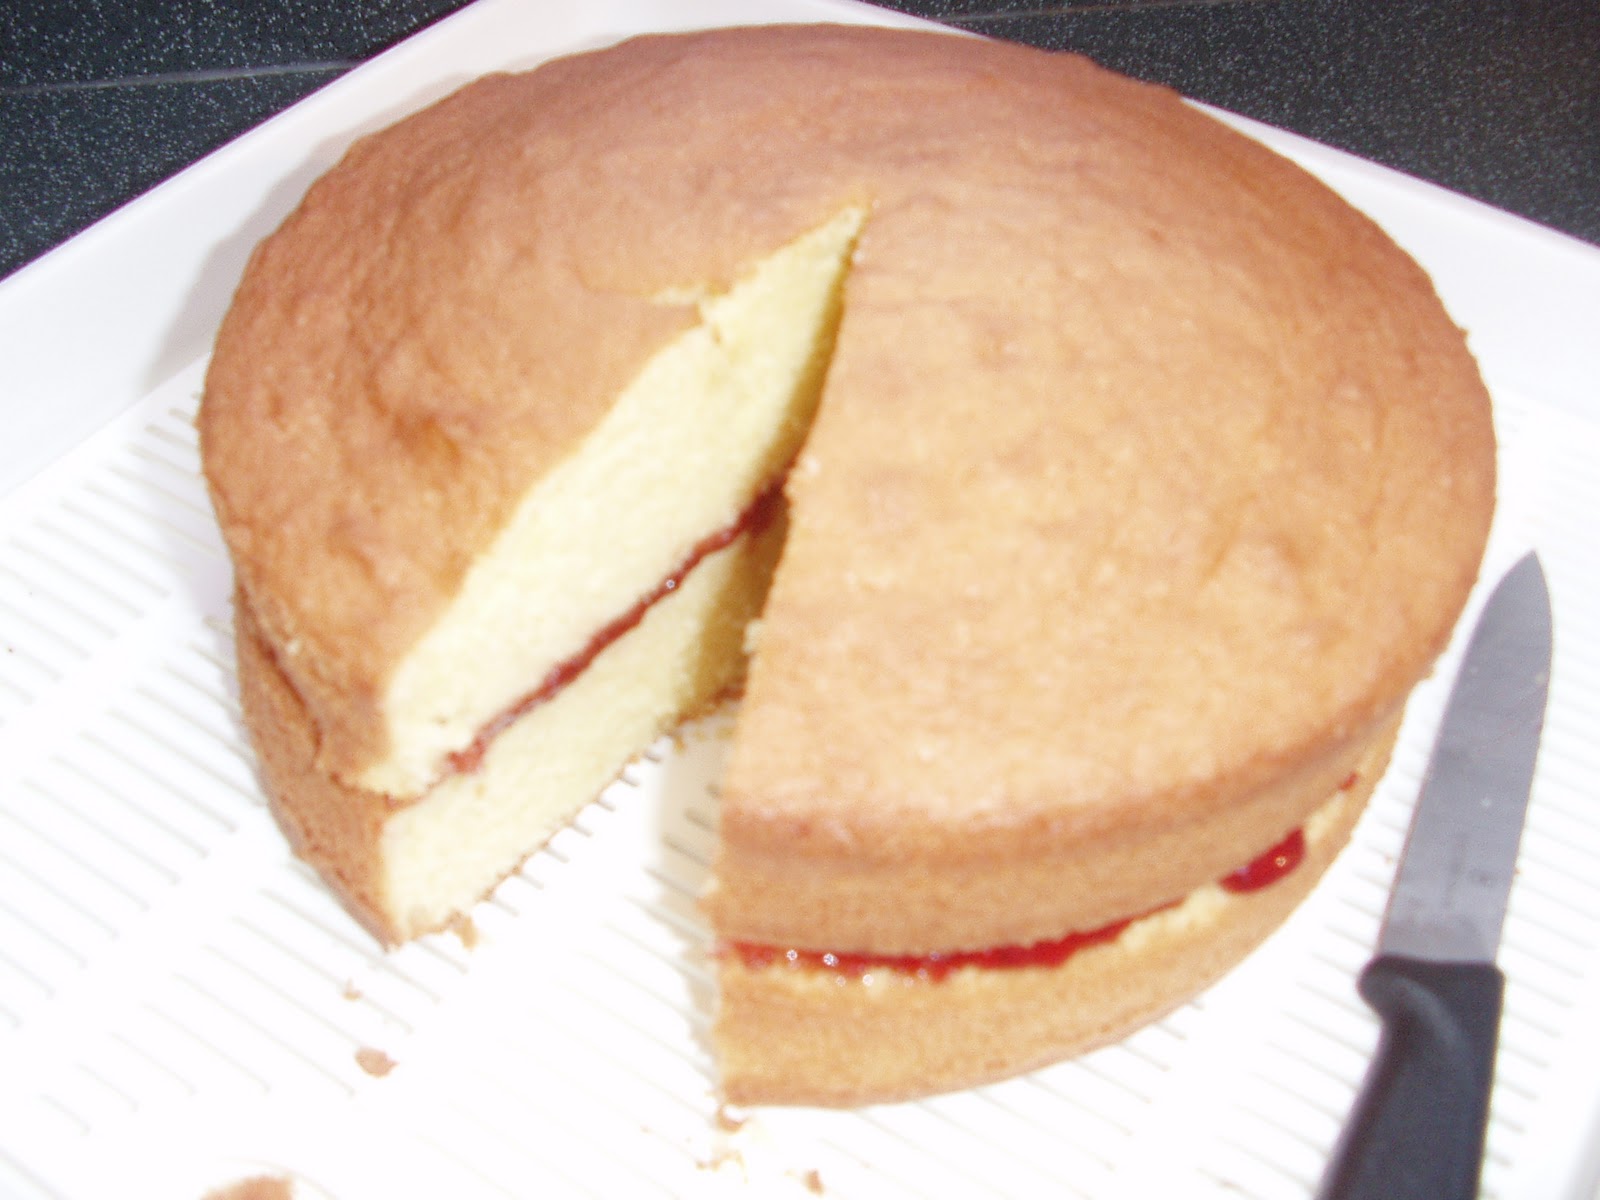 Strawberry jam and vanilla sponge cake